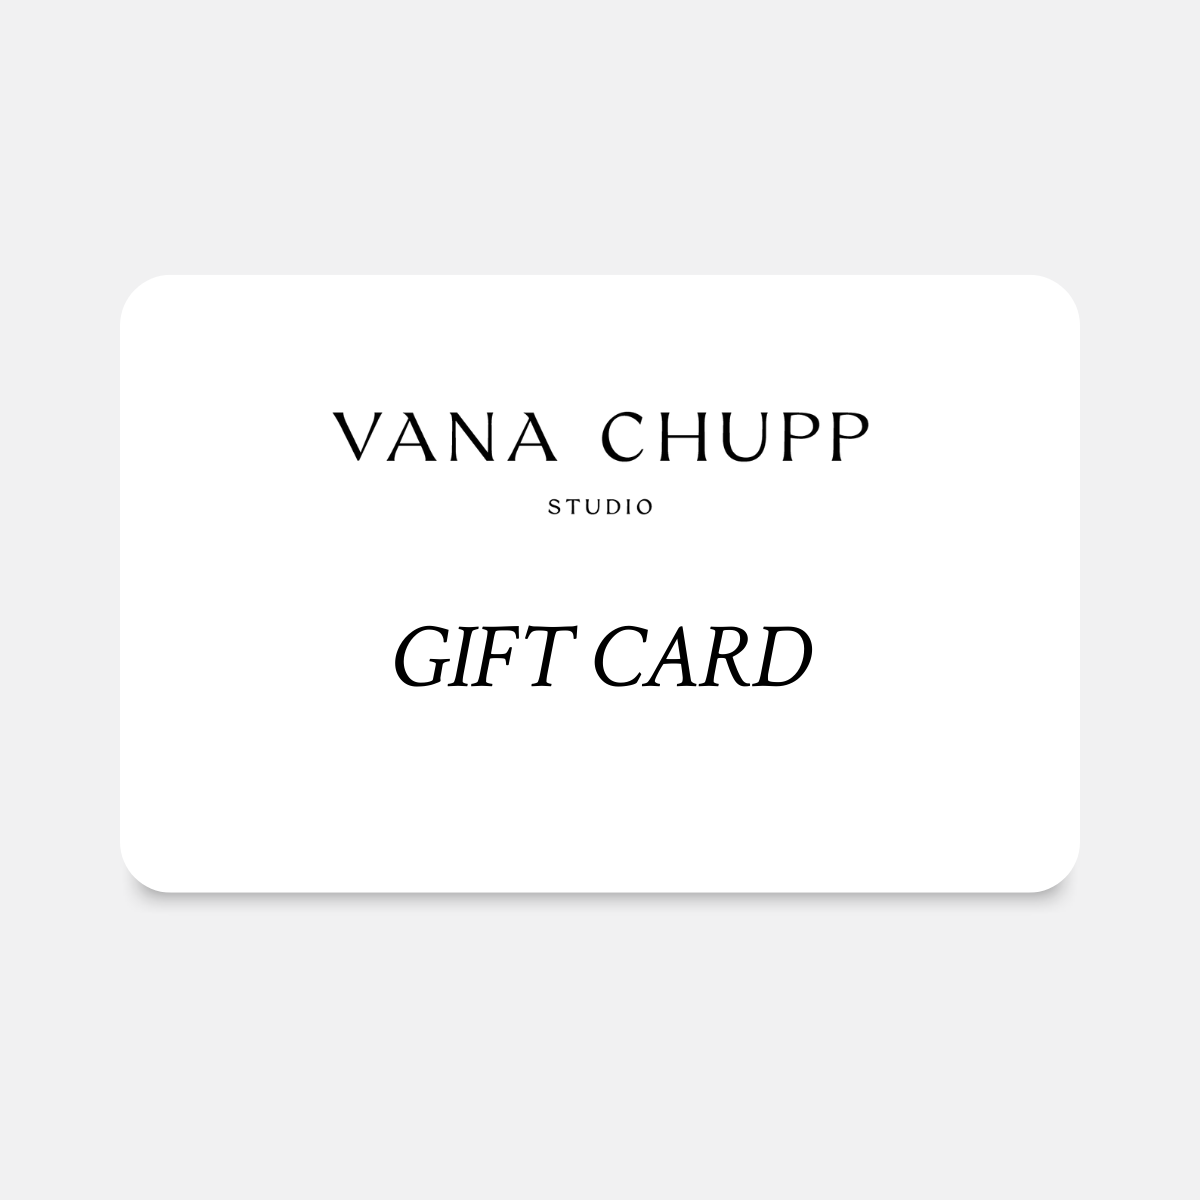 Vana Chupp Studio Gift Card